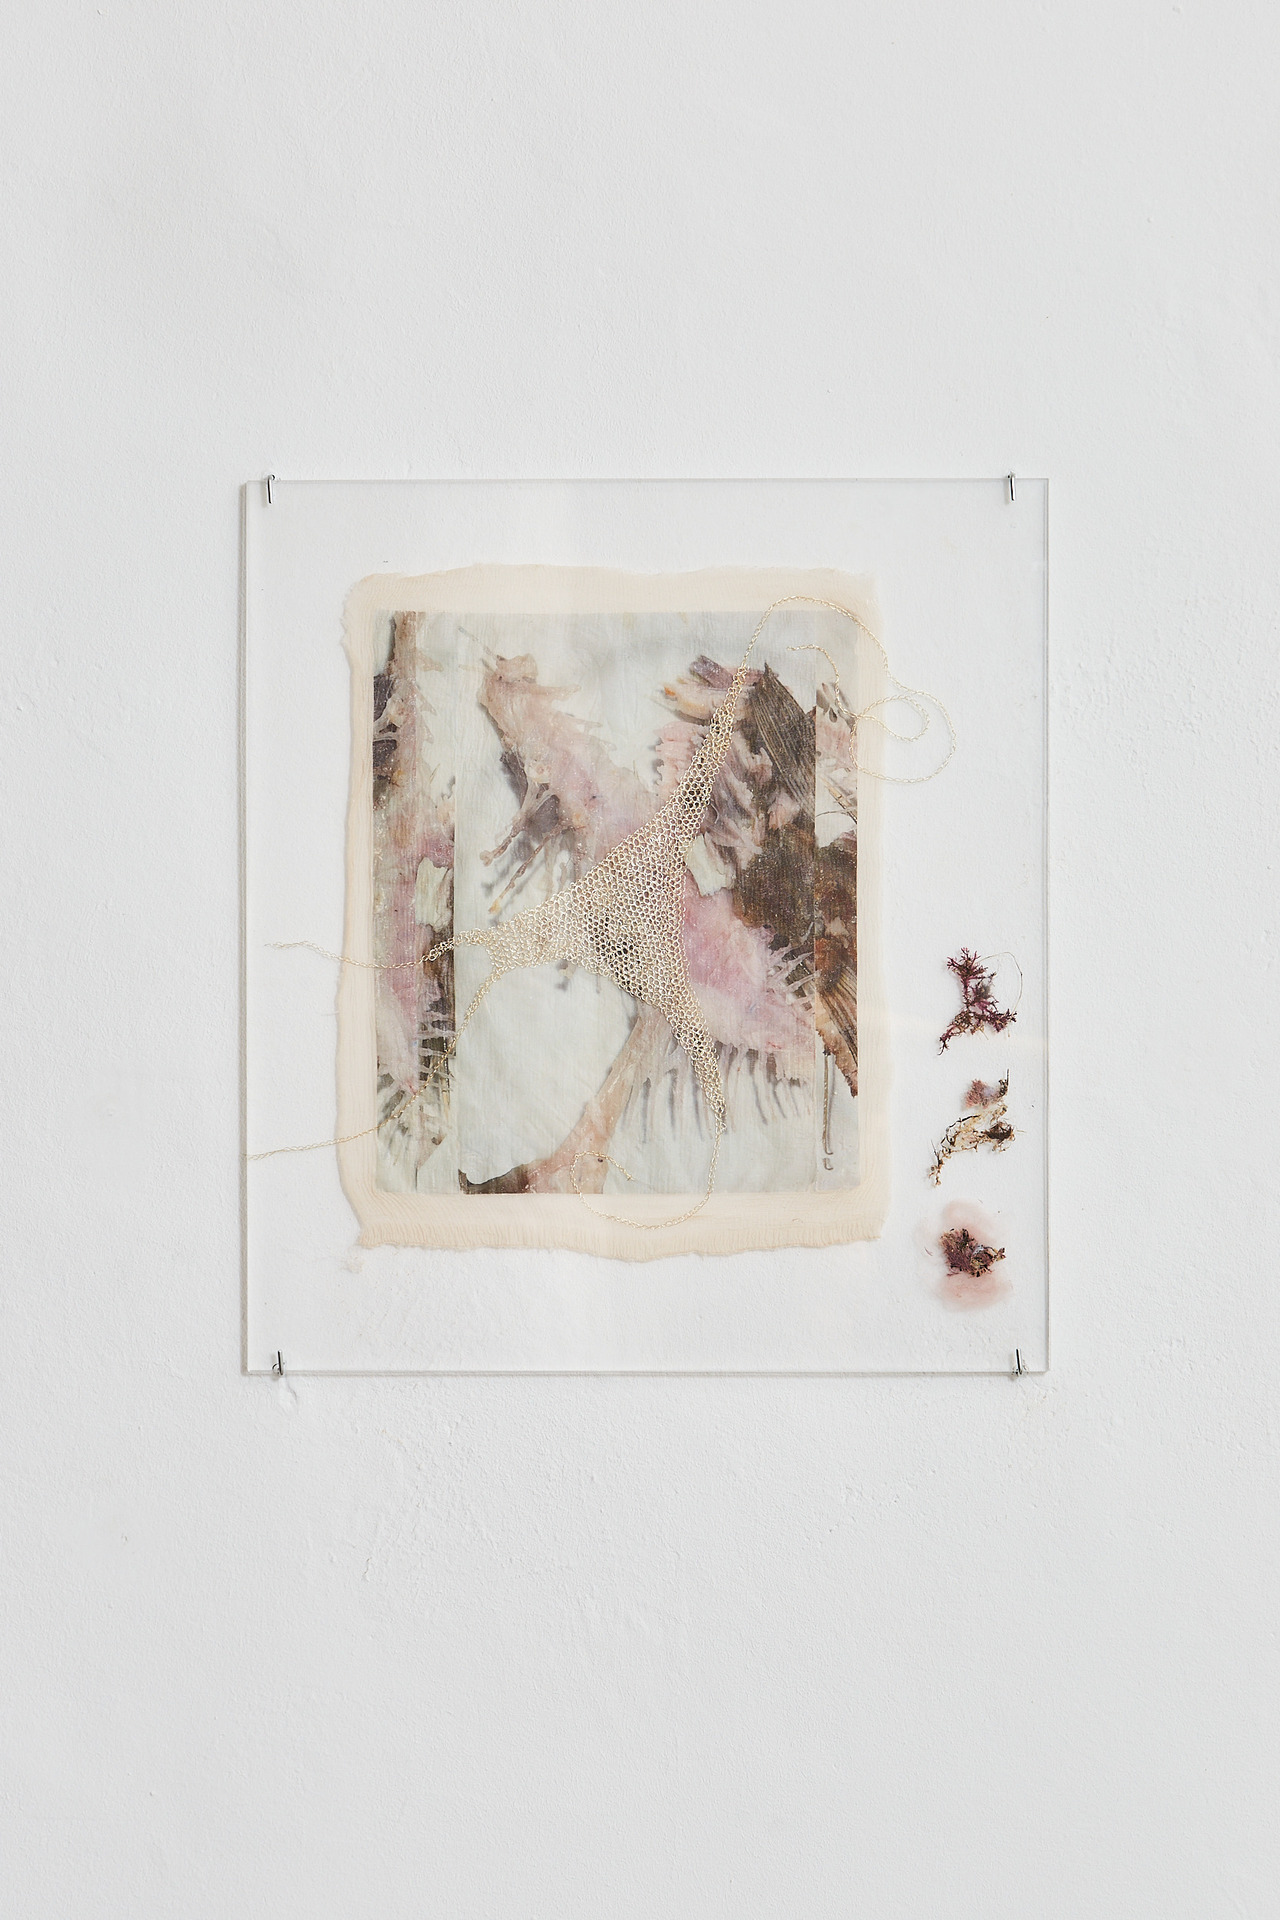 Julia Creuheras, 'Vestigio II', 2021, print on silk, silver, wook, seaweed and plexiglass, 44,6 x 40,1 cm.